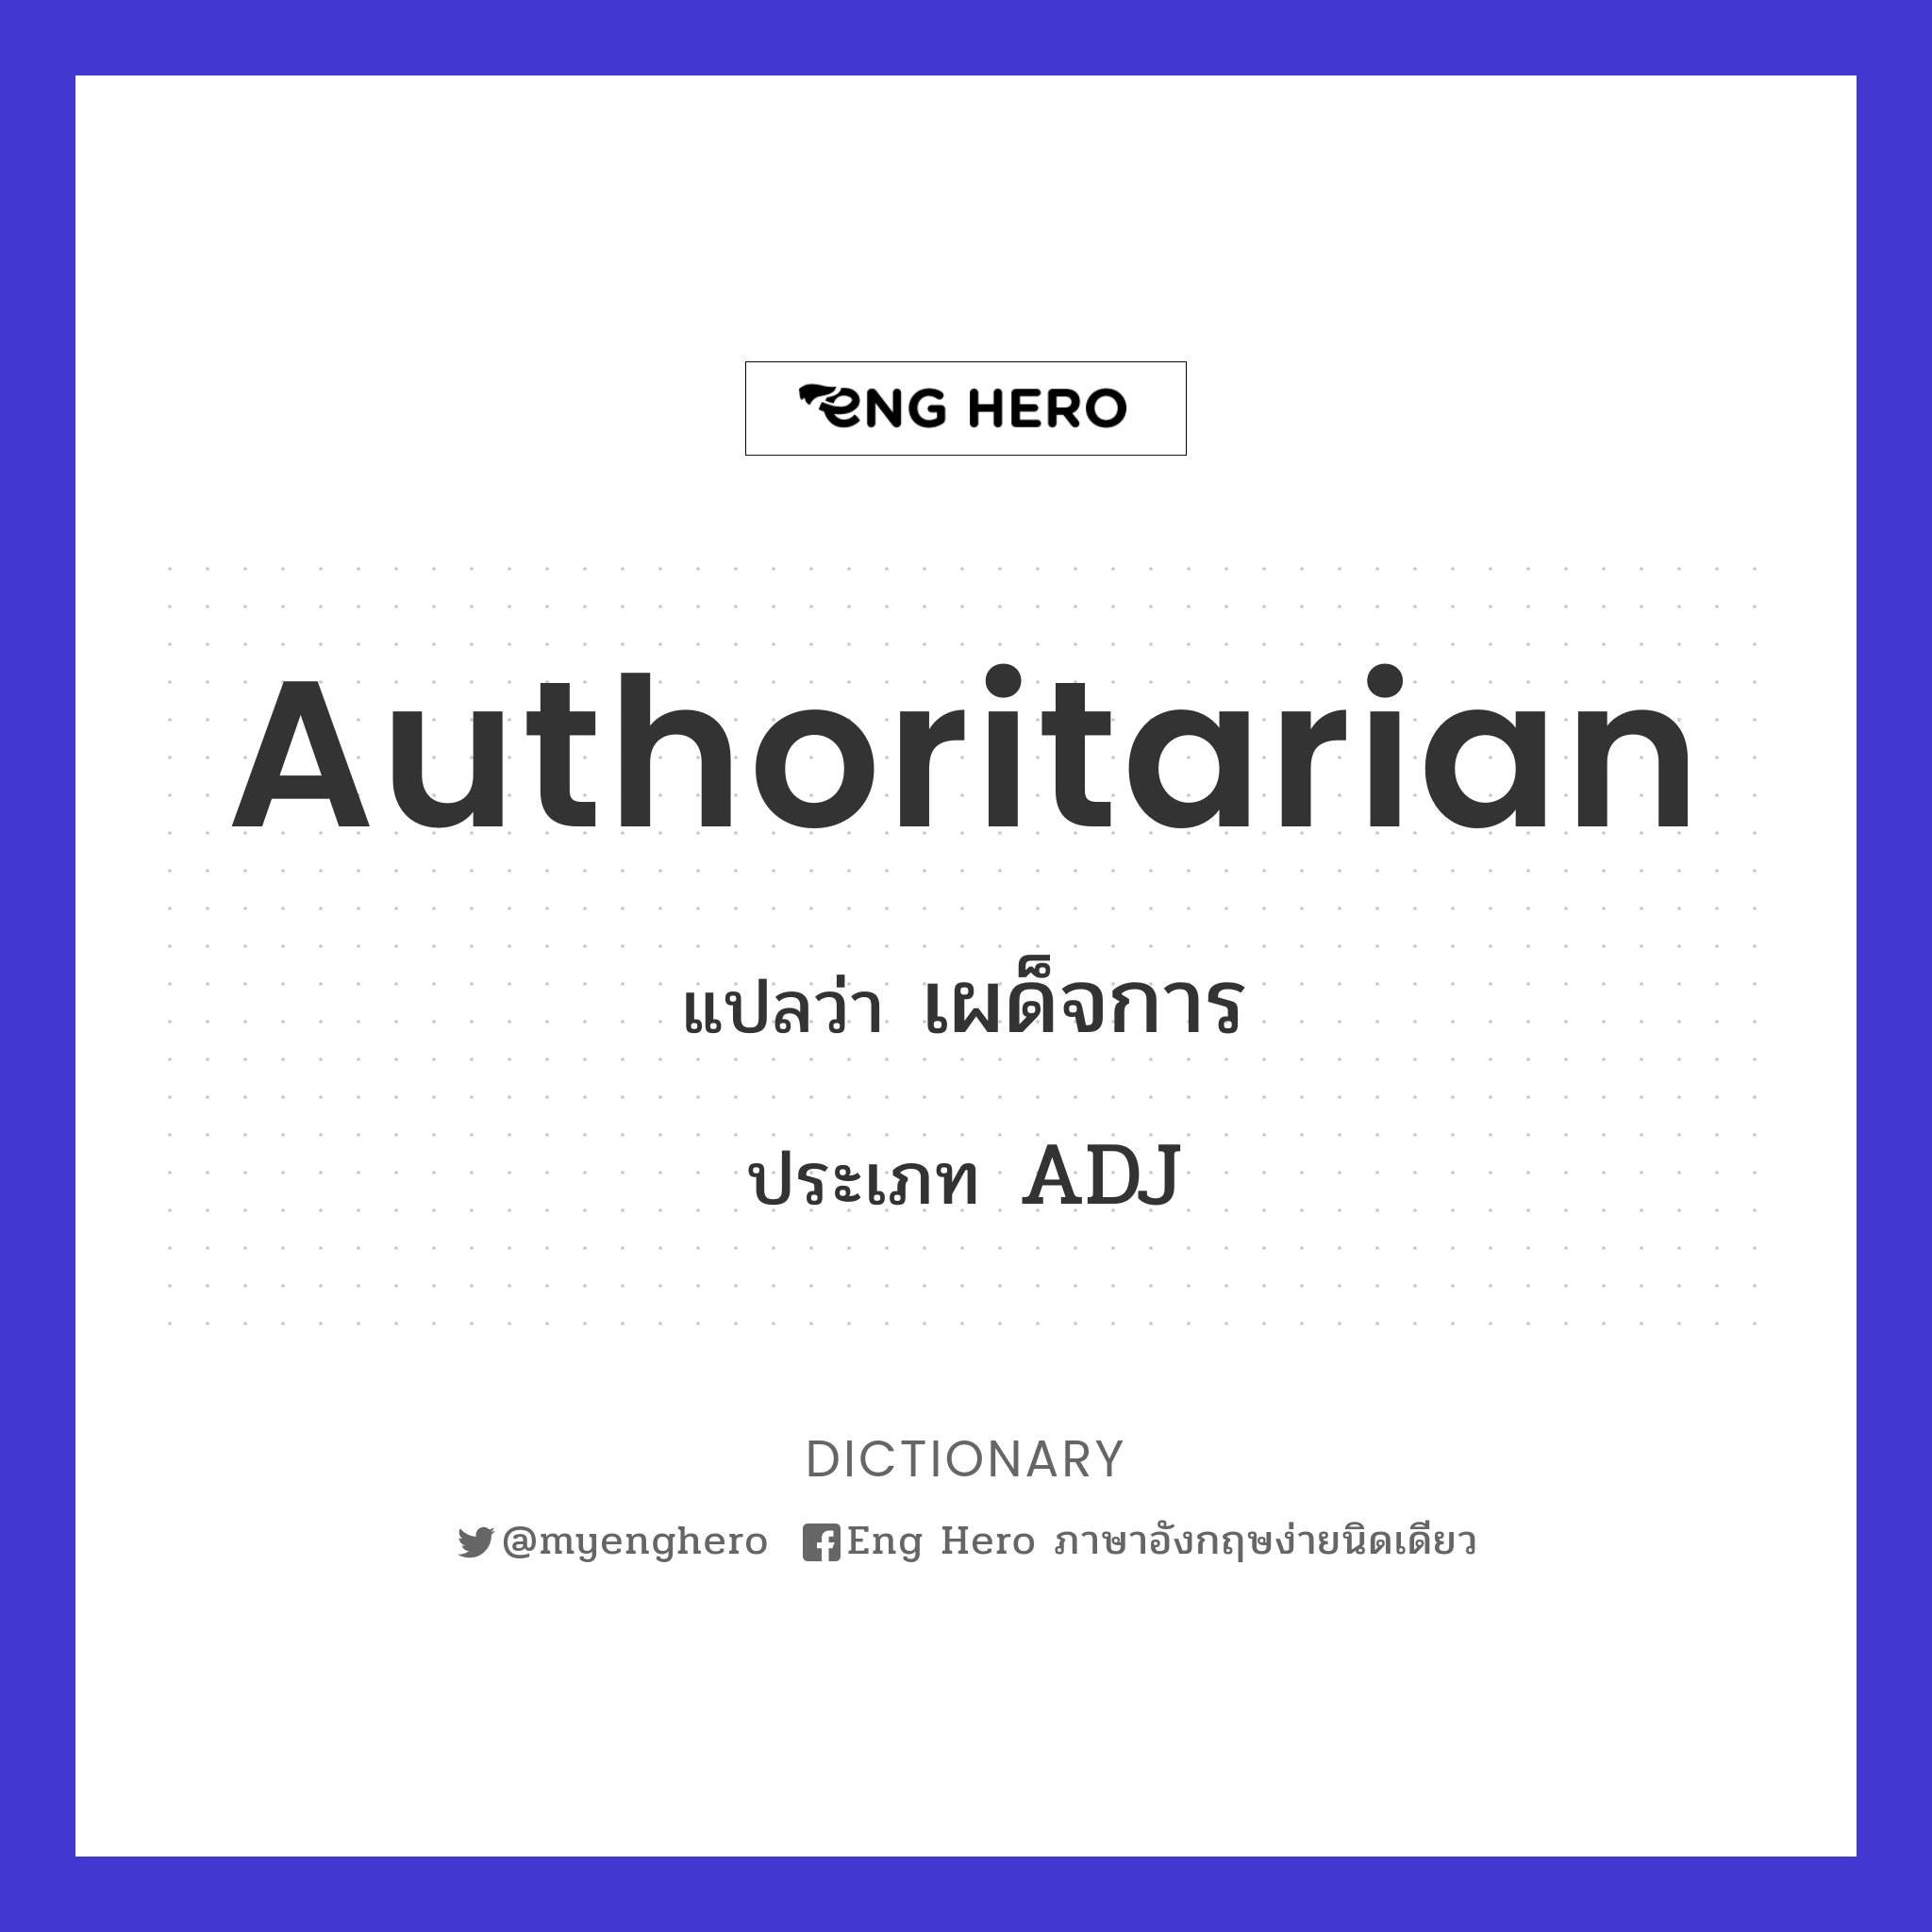 authoritarian